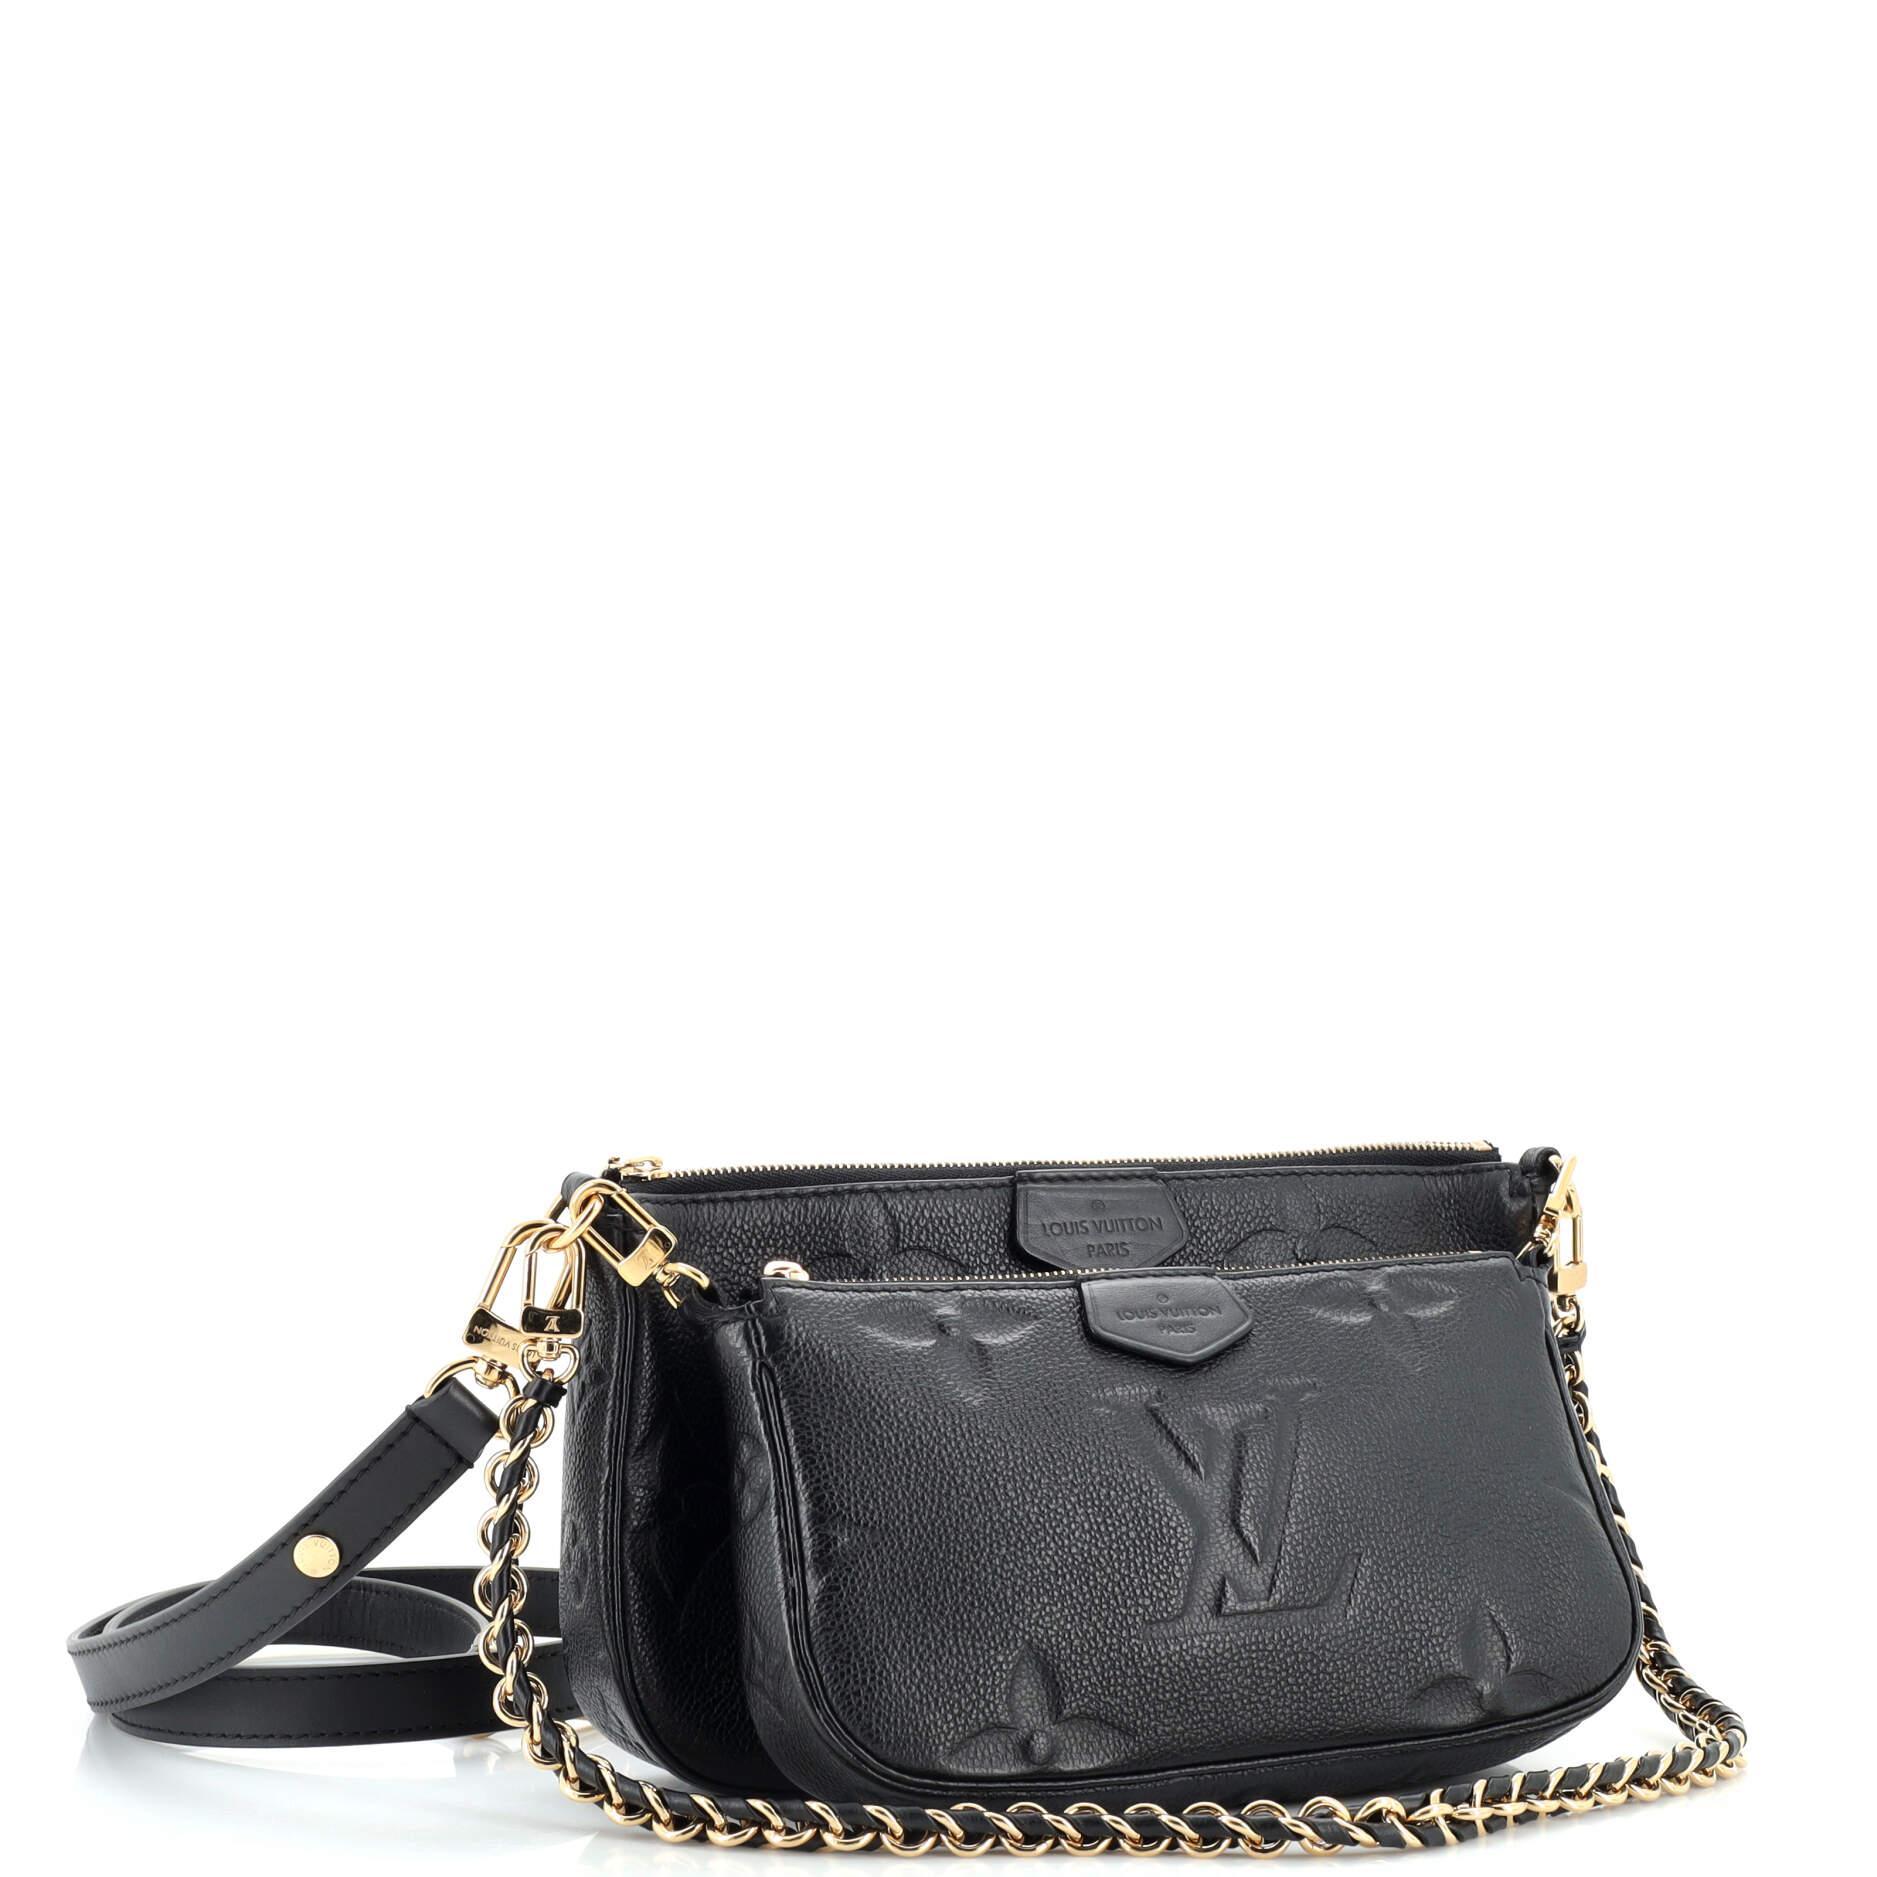 Multi Pochette Accessoires Monogram Empreinte Leather - Women - Handbags